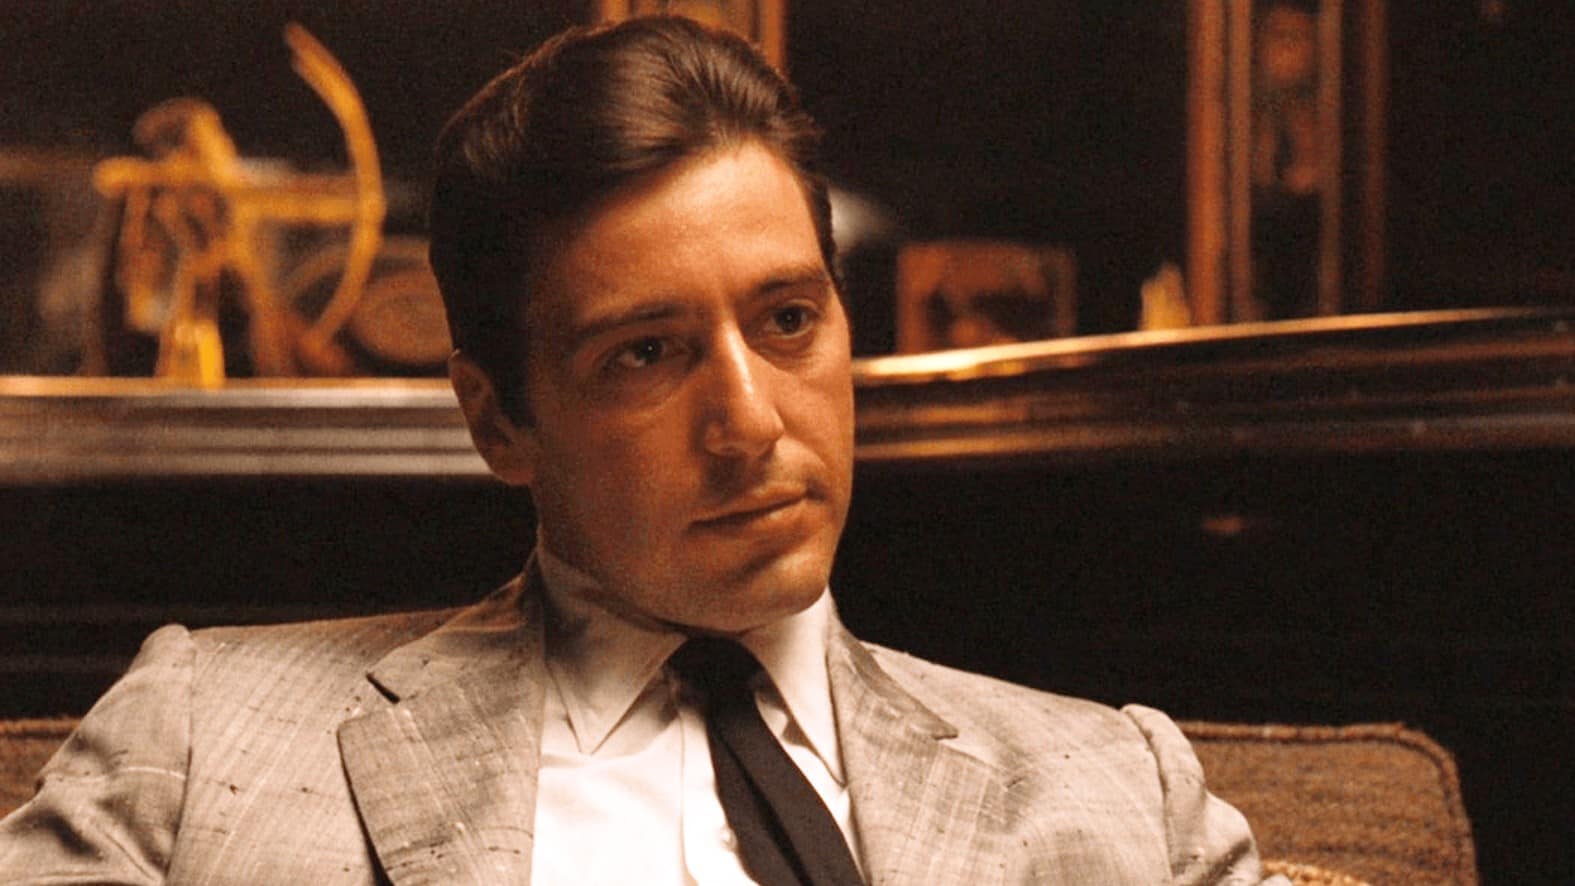 Al Pacino wearing a gray suit